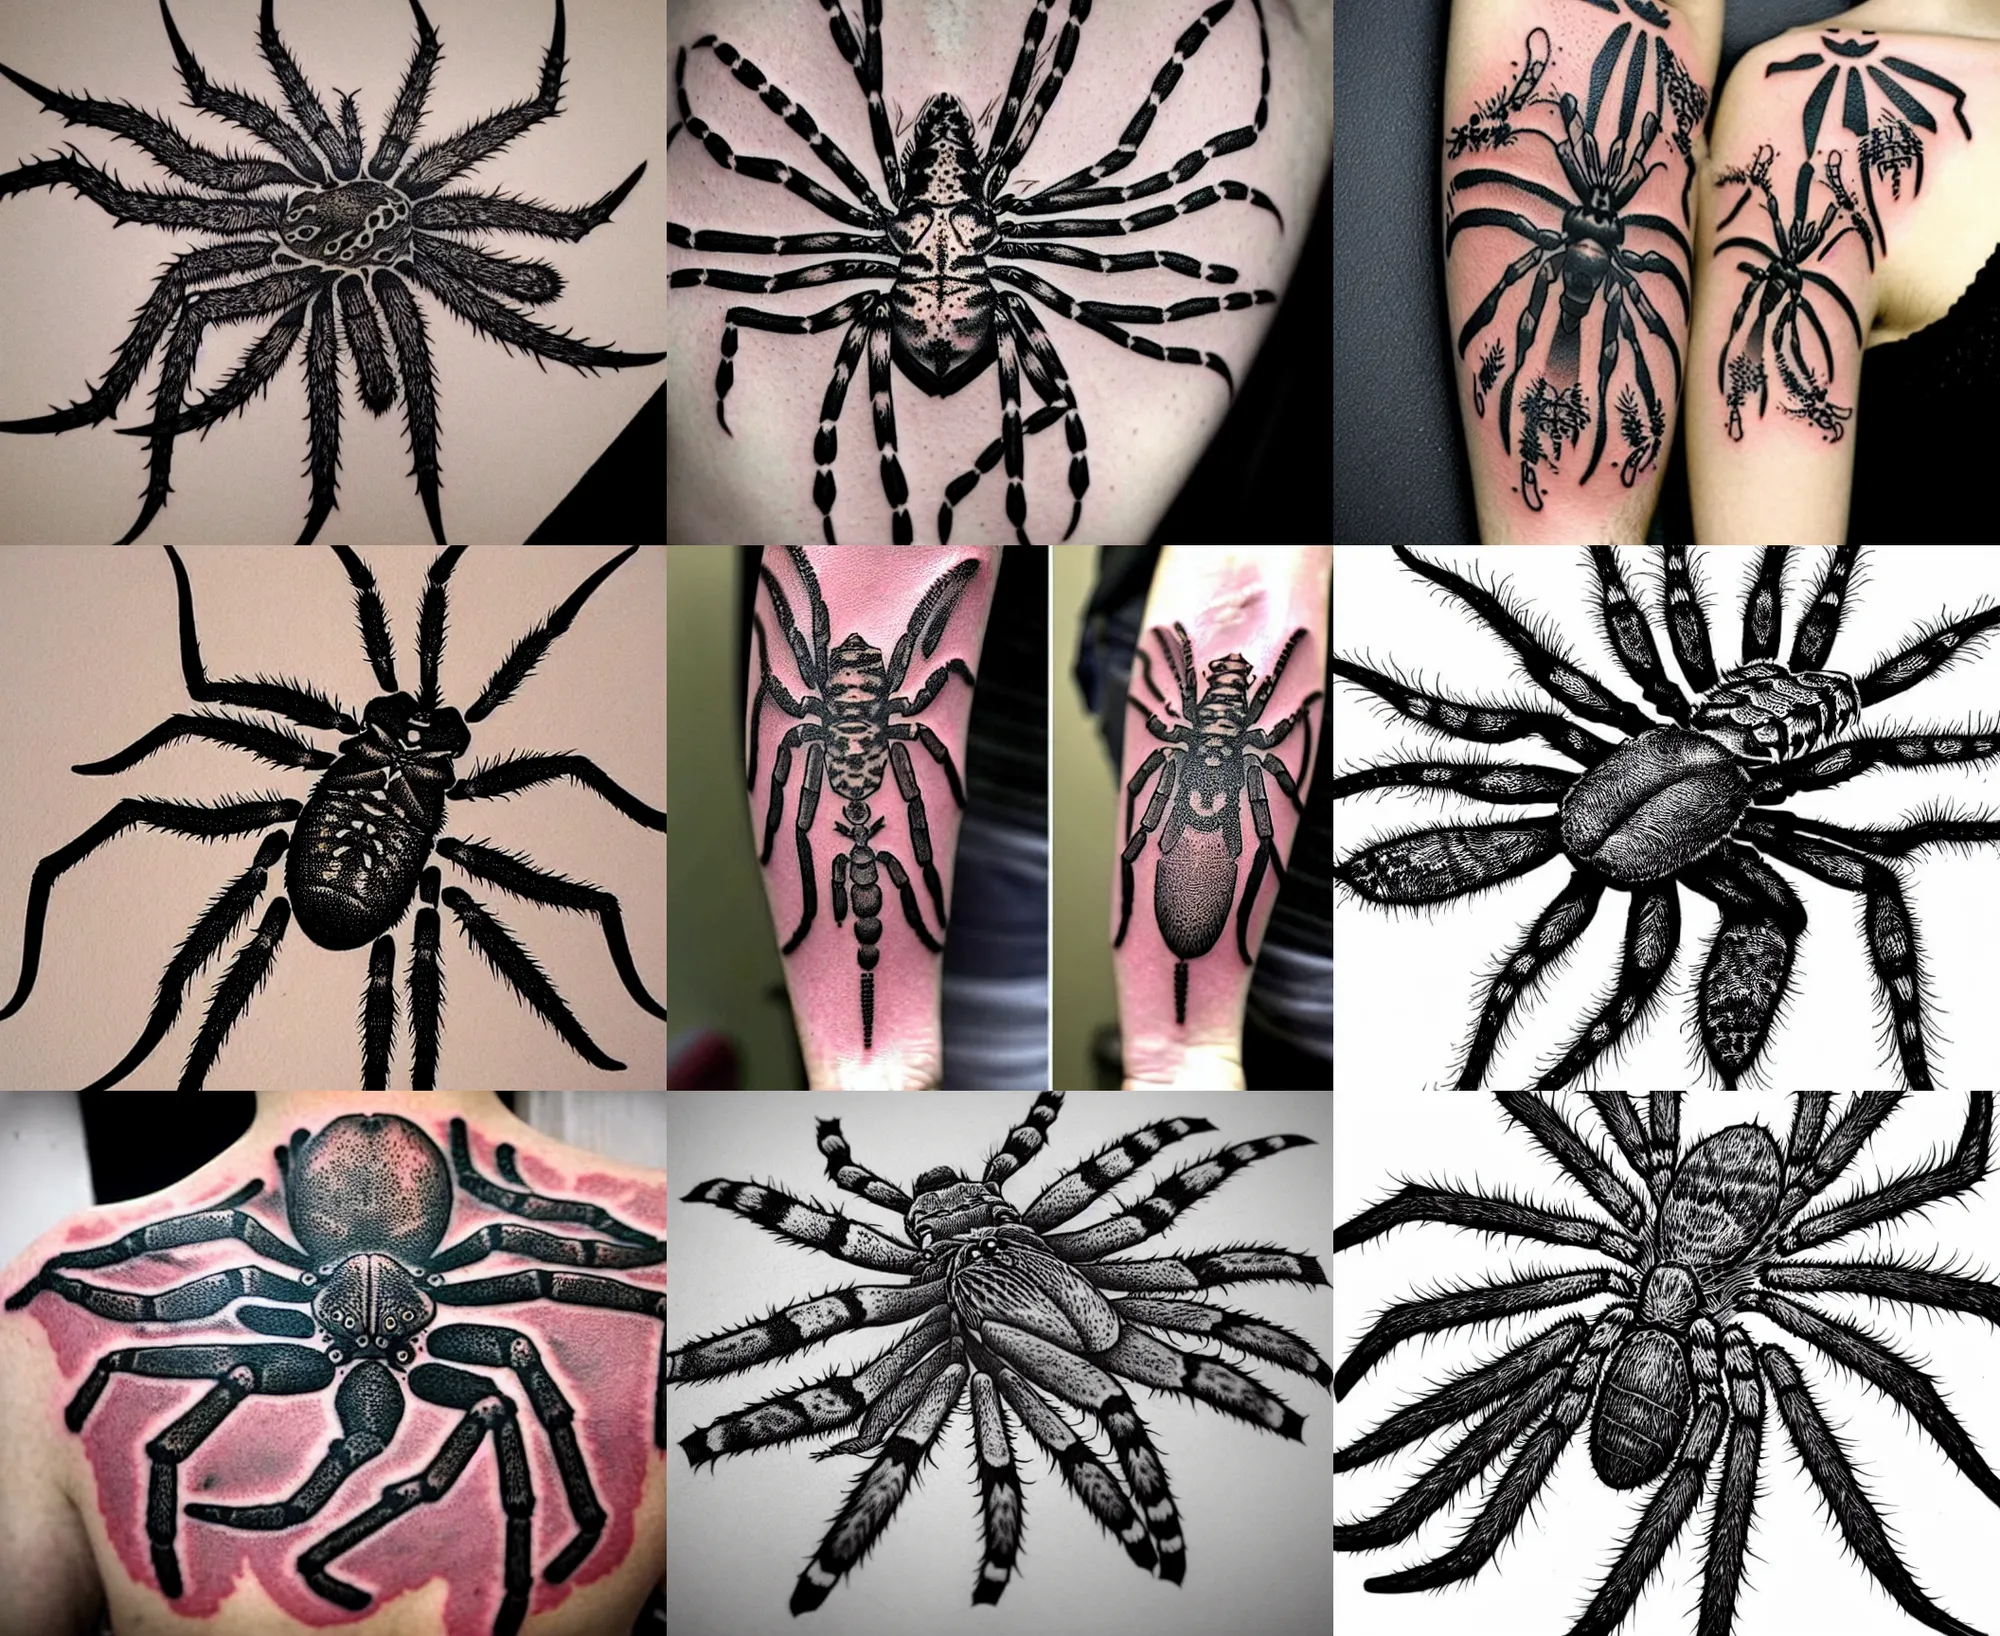 Huntsman Spider (Delena cancerides)